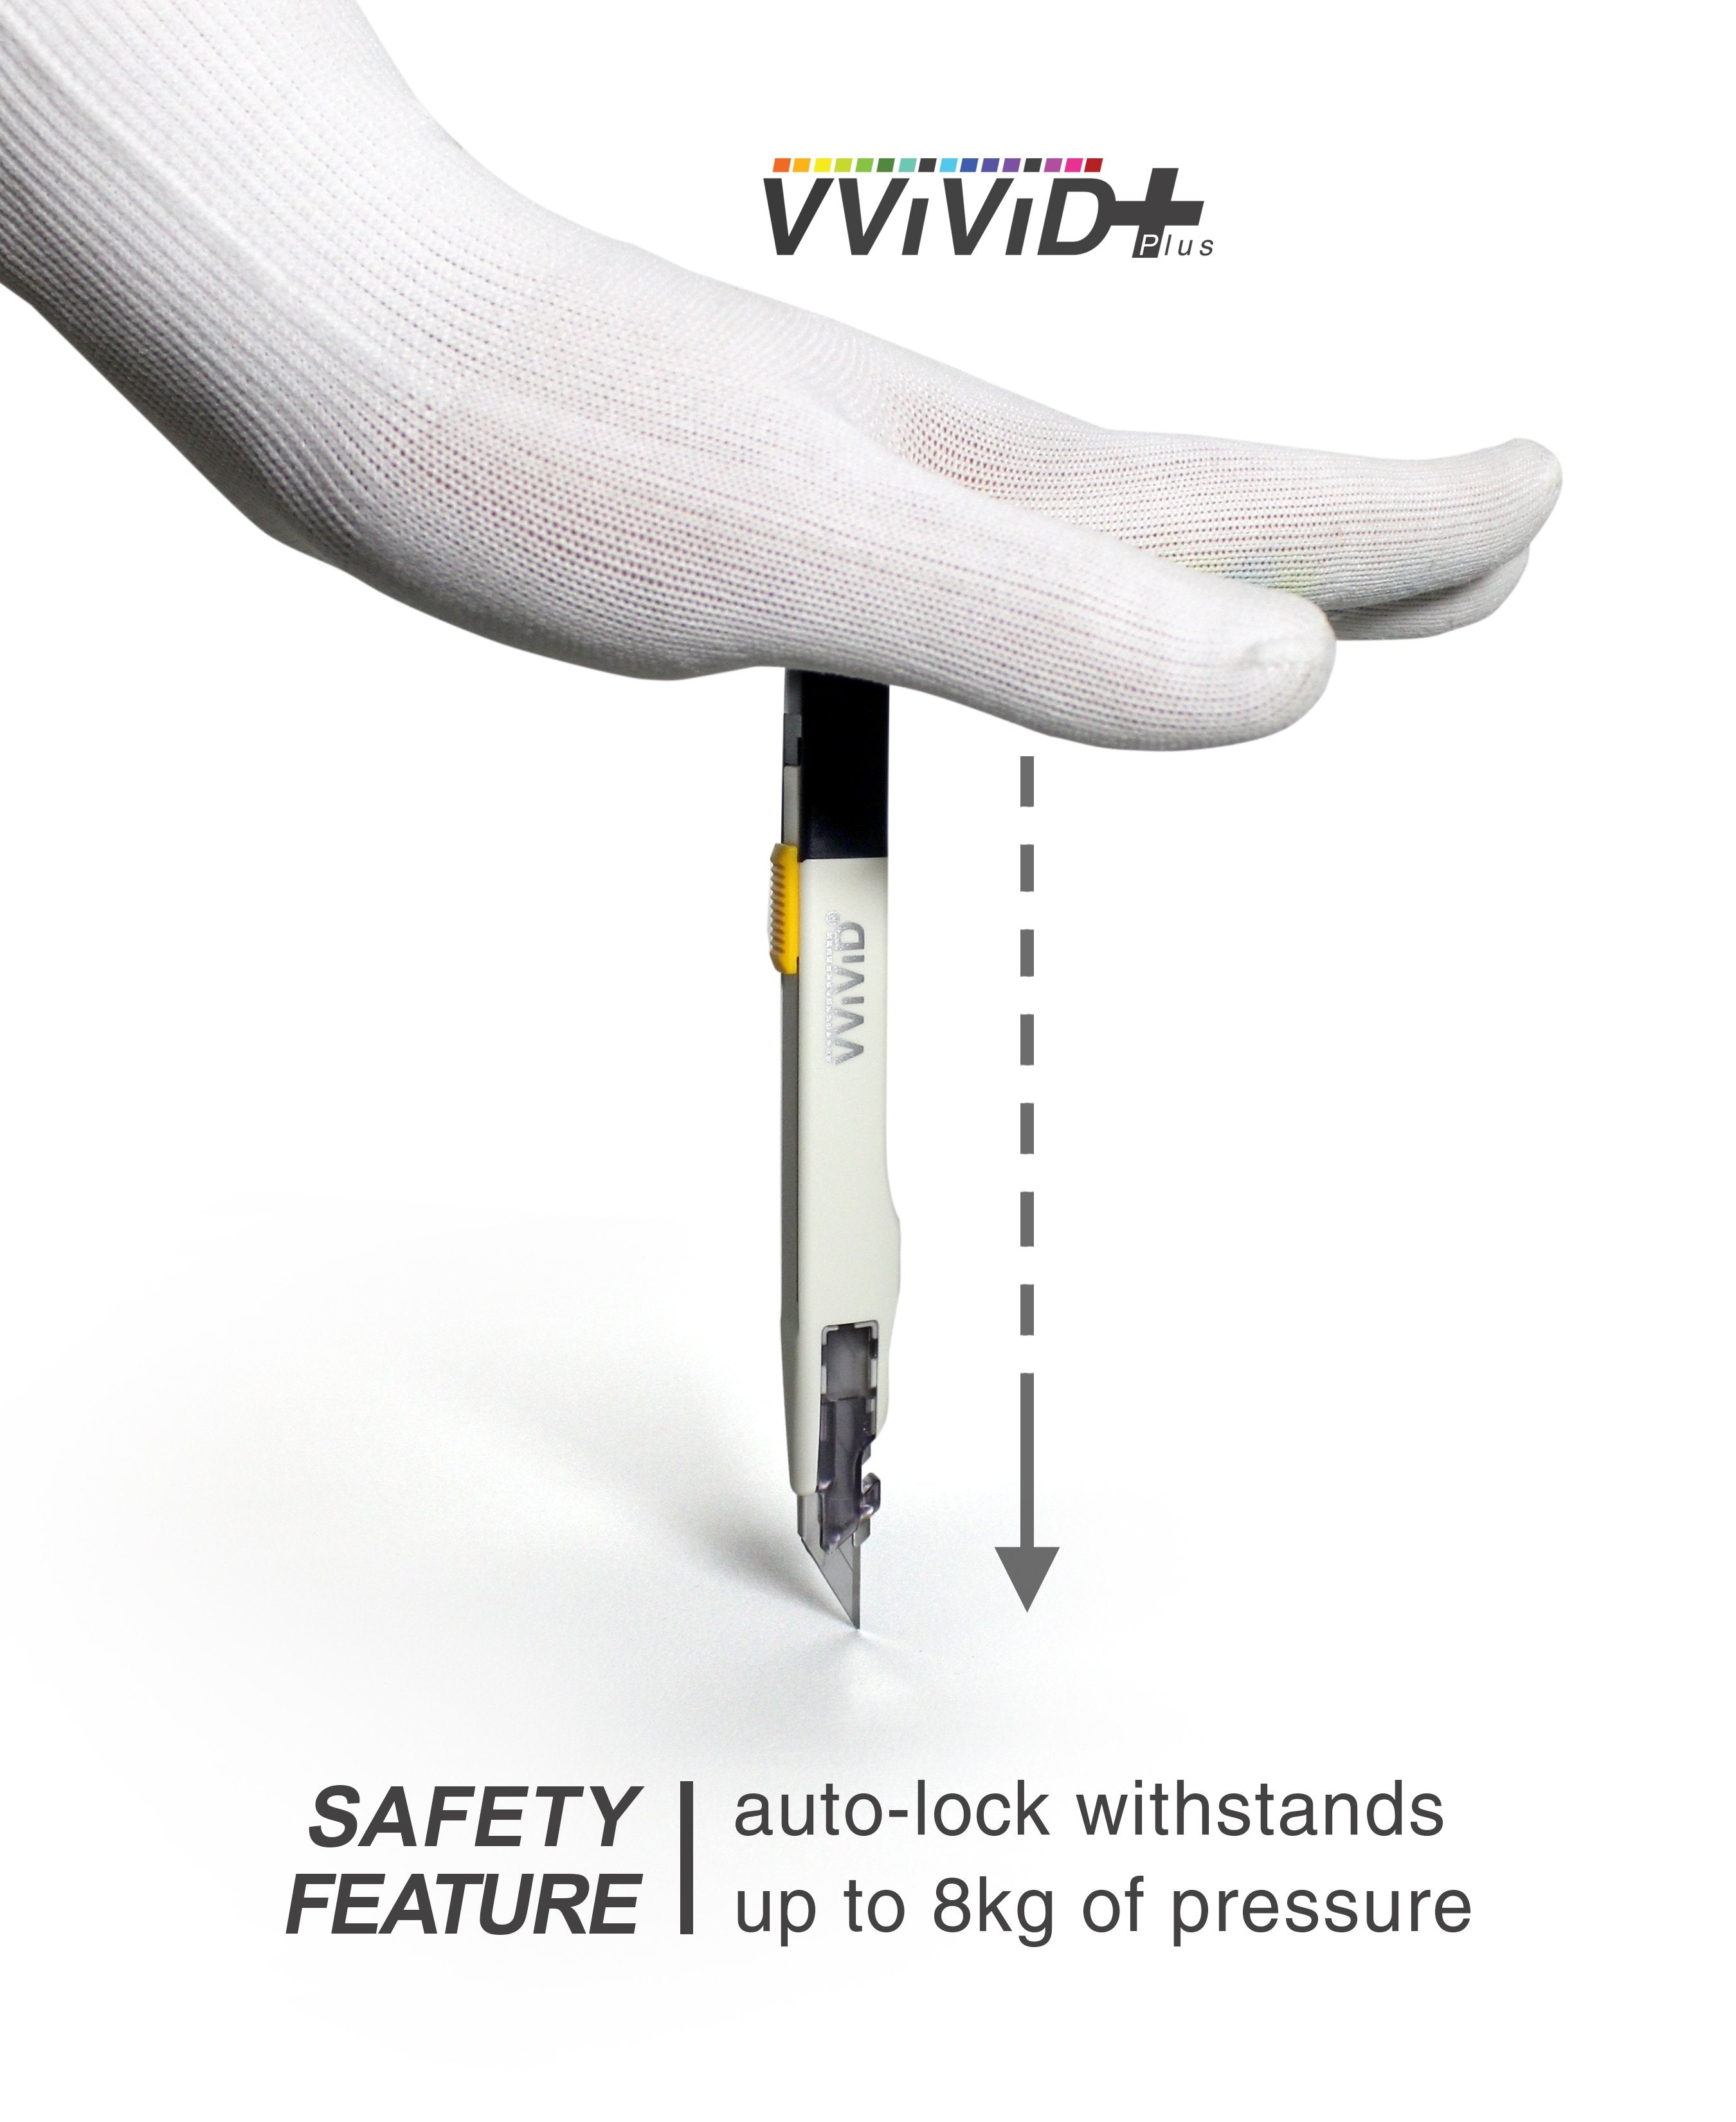 VViViD+ Premium Precision 30° Retractable Utility Cutting Knife